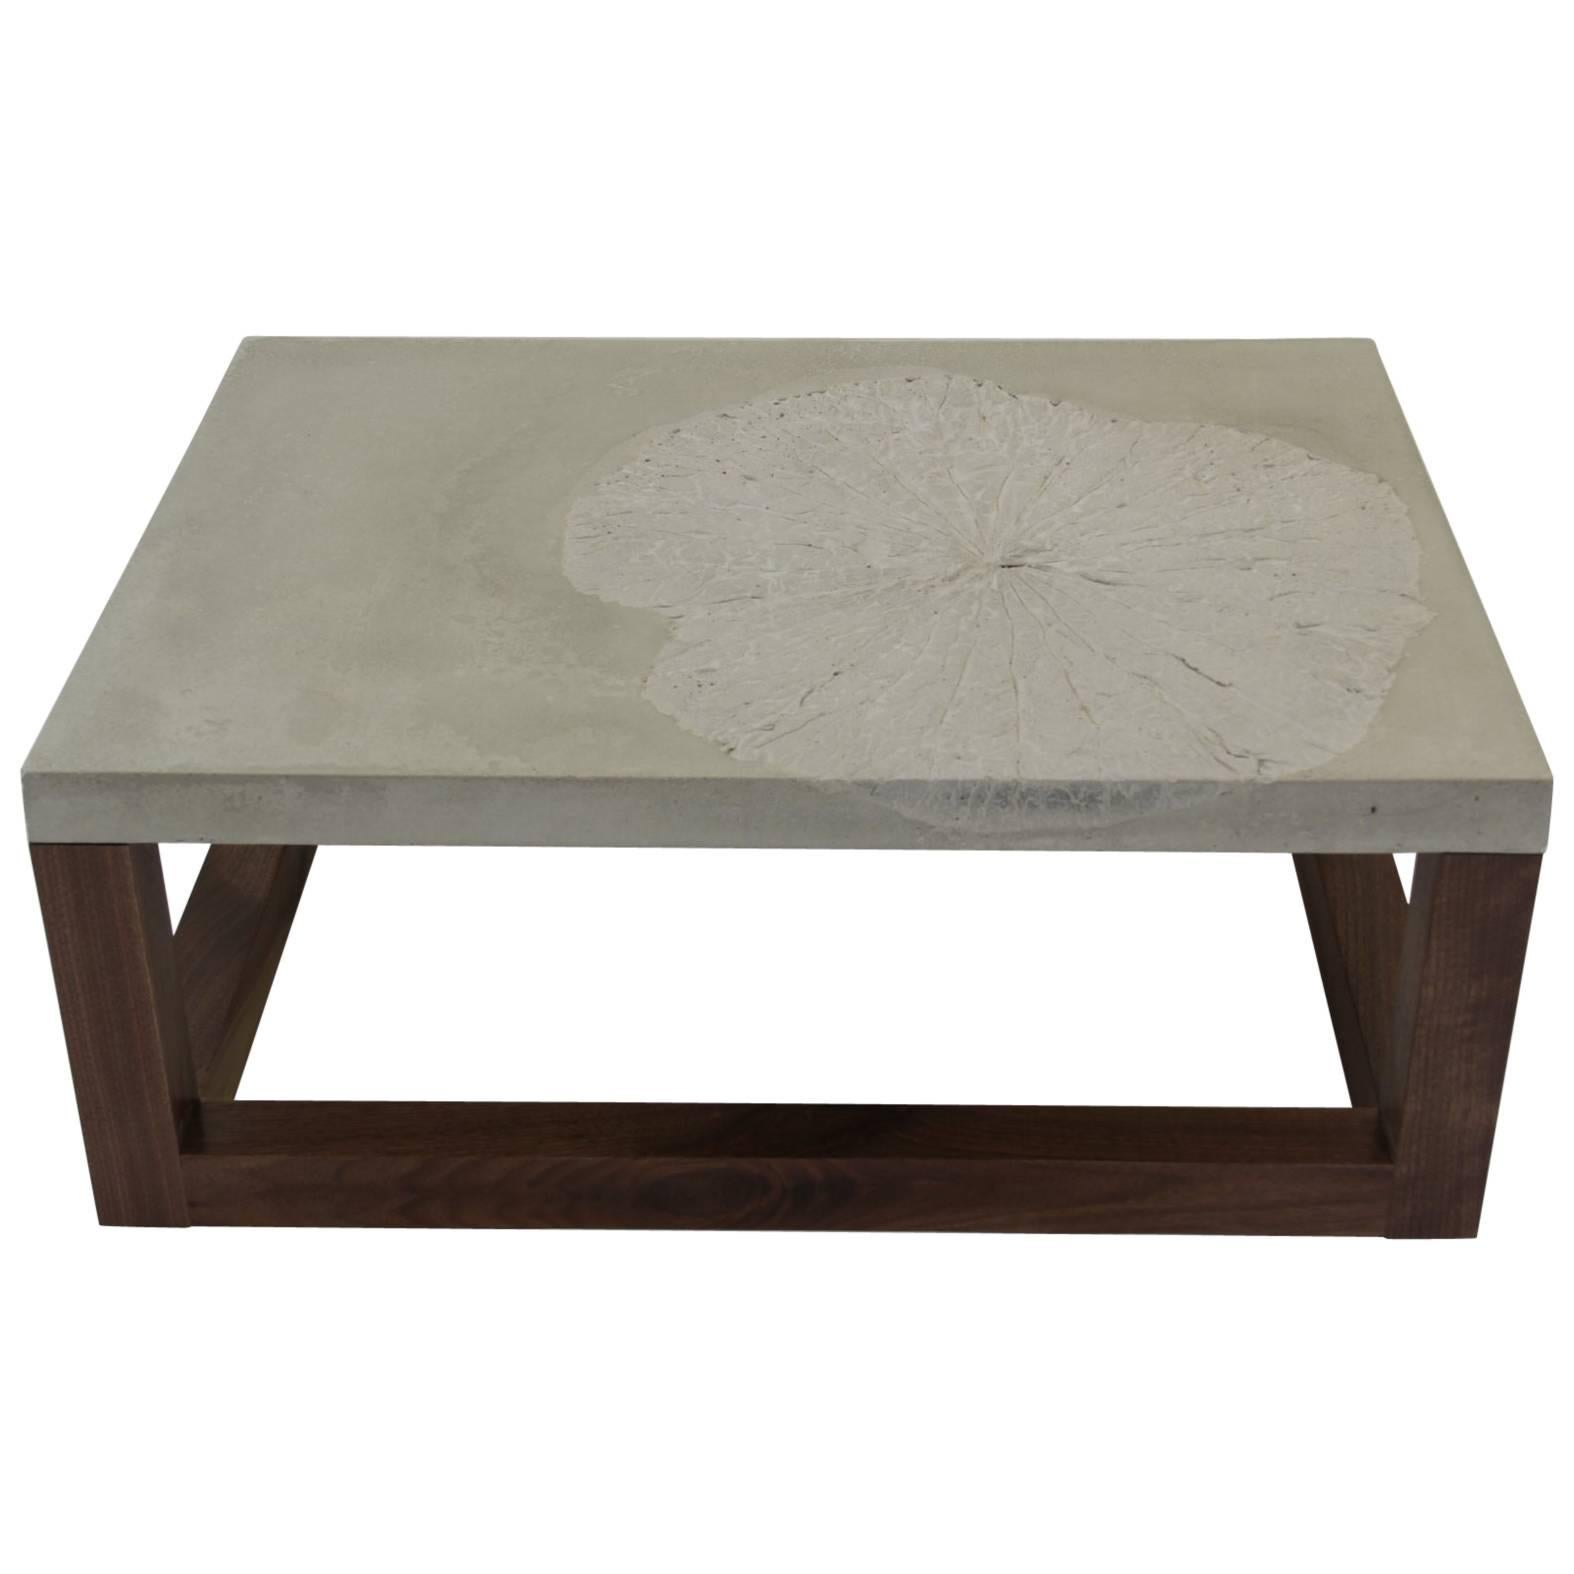 Lotus Leaf or Minimal Modern Concrete Coffee Table For Sale